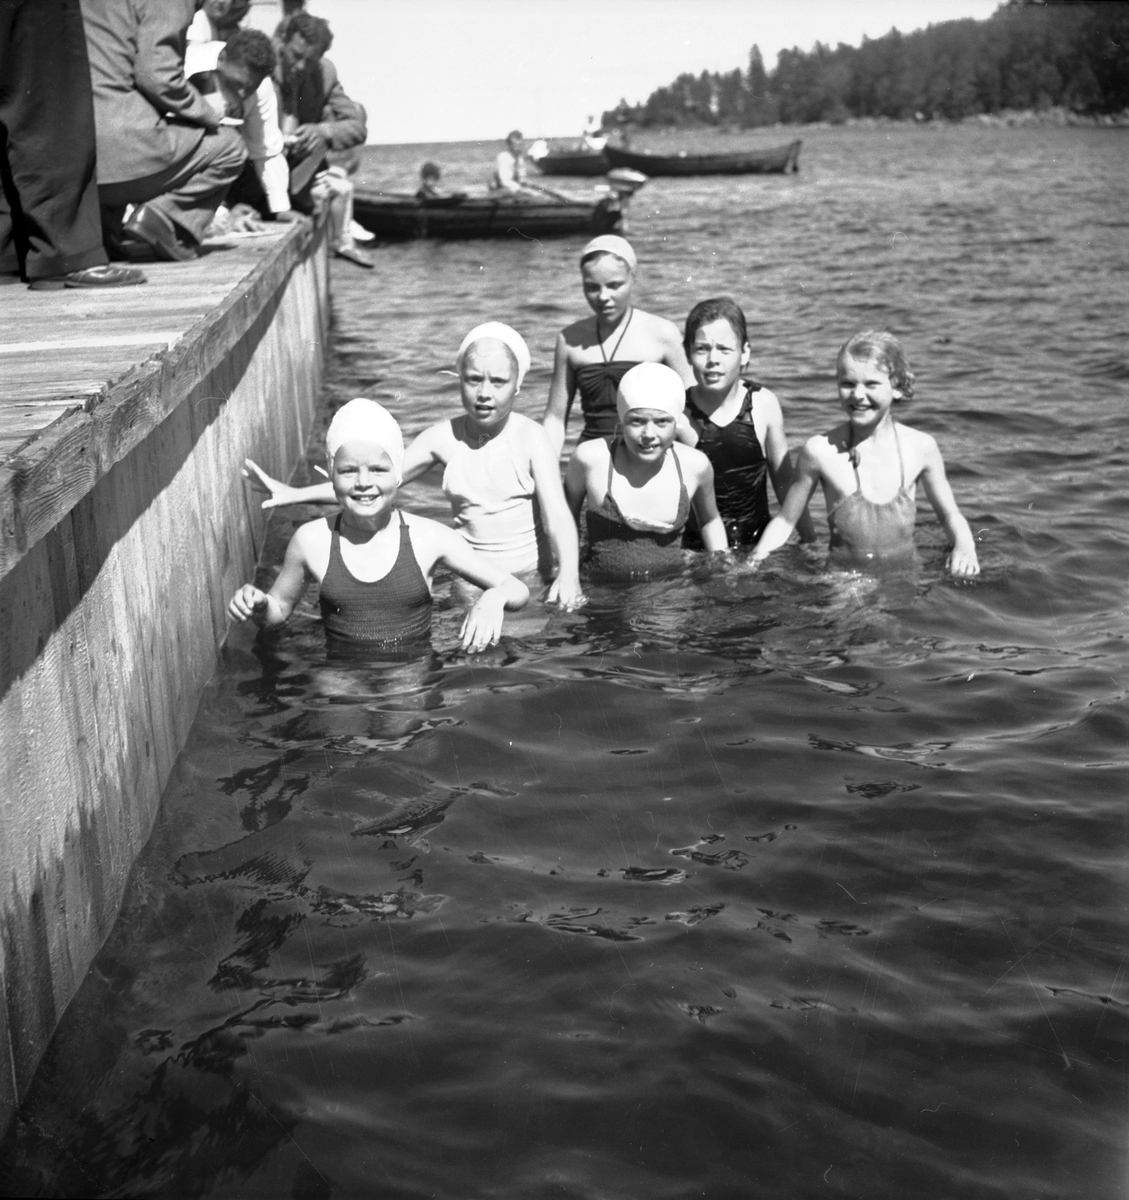 Simningens dag firas i Furuvik. 6 juli 1952.           Beställn. Margit Öberg, Väpnargatan 8 A, Gävle


